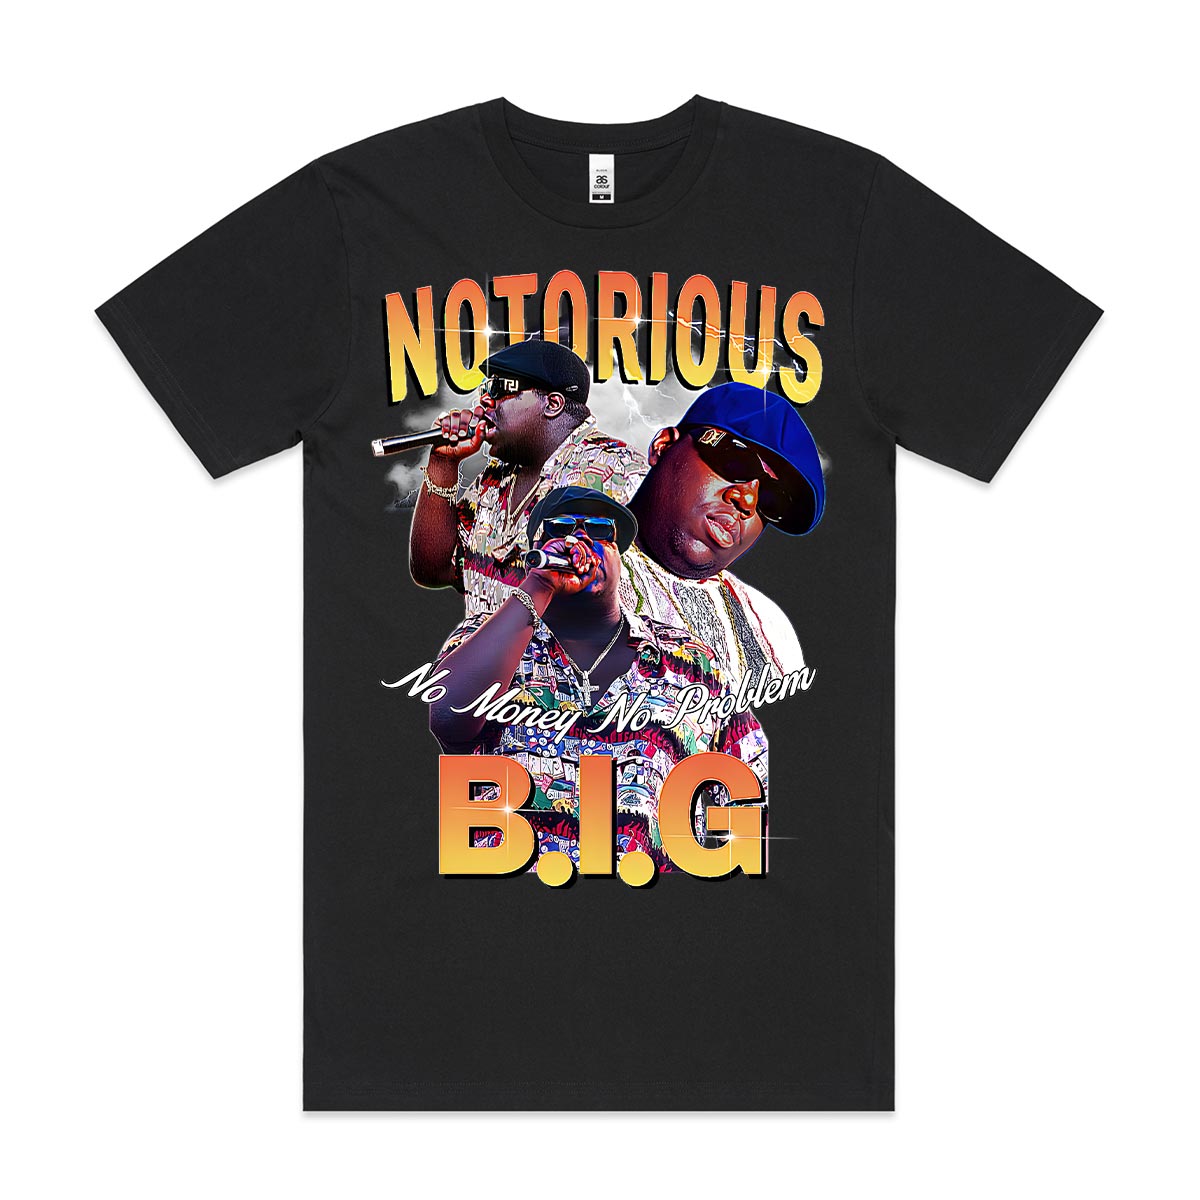 The Notorious B.I.G. 2 T-Shirt Rapper Family Fan Music Hip Hop Culture